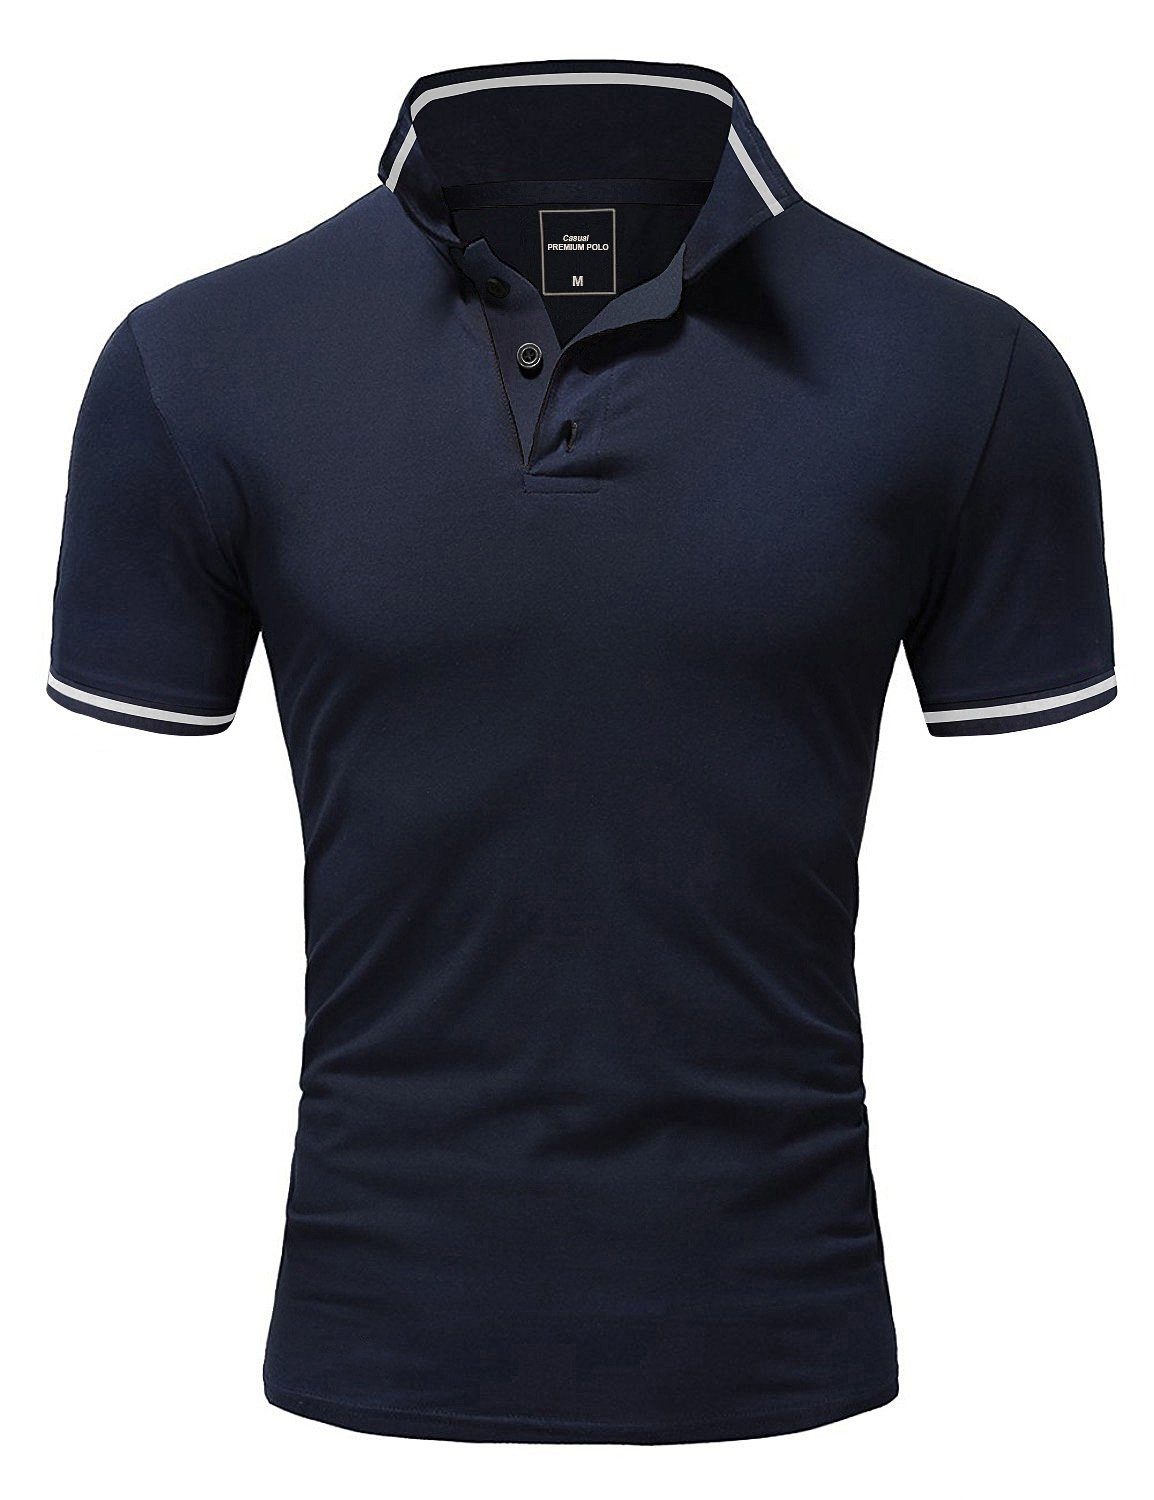 Amaci&Sons Poloshirt PROVIDENCE Herren Basic Kontrast Kurzarm Polohemd T-Shirt Navyblau/Weiß